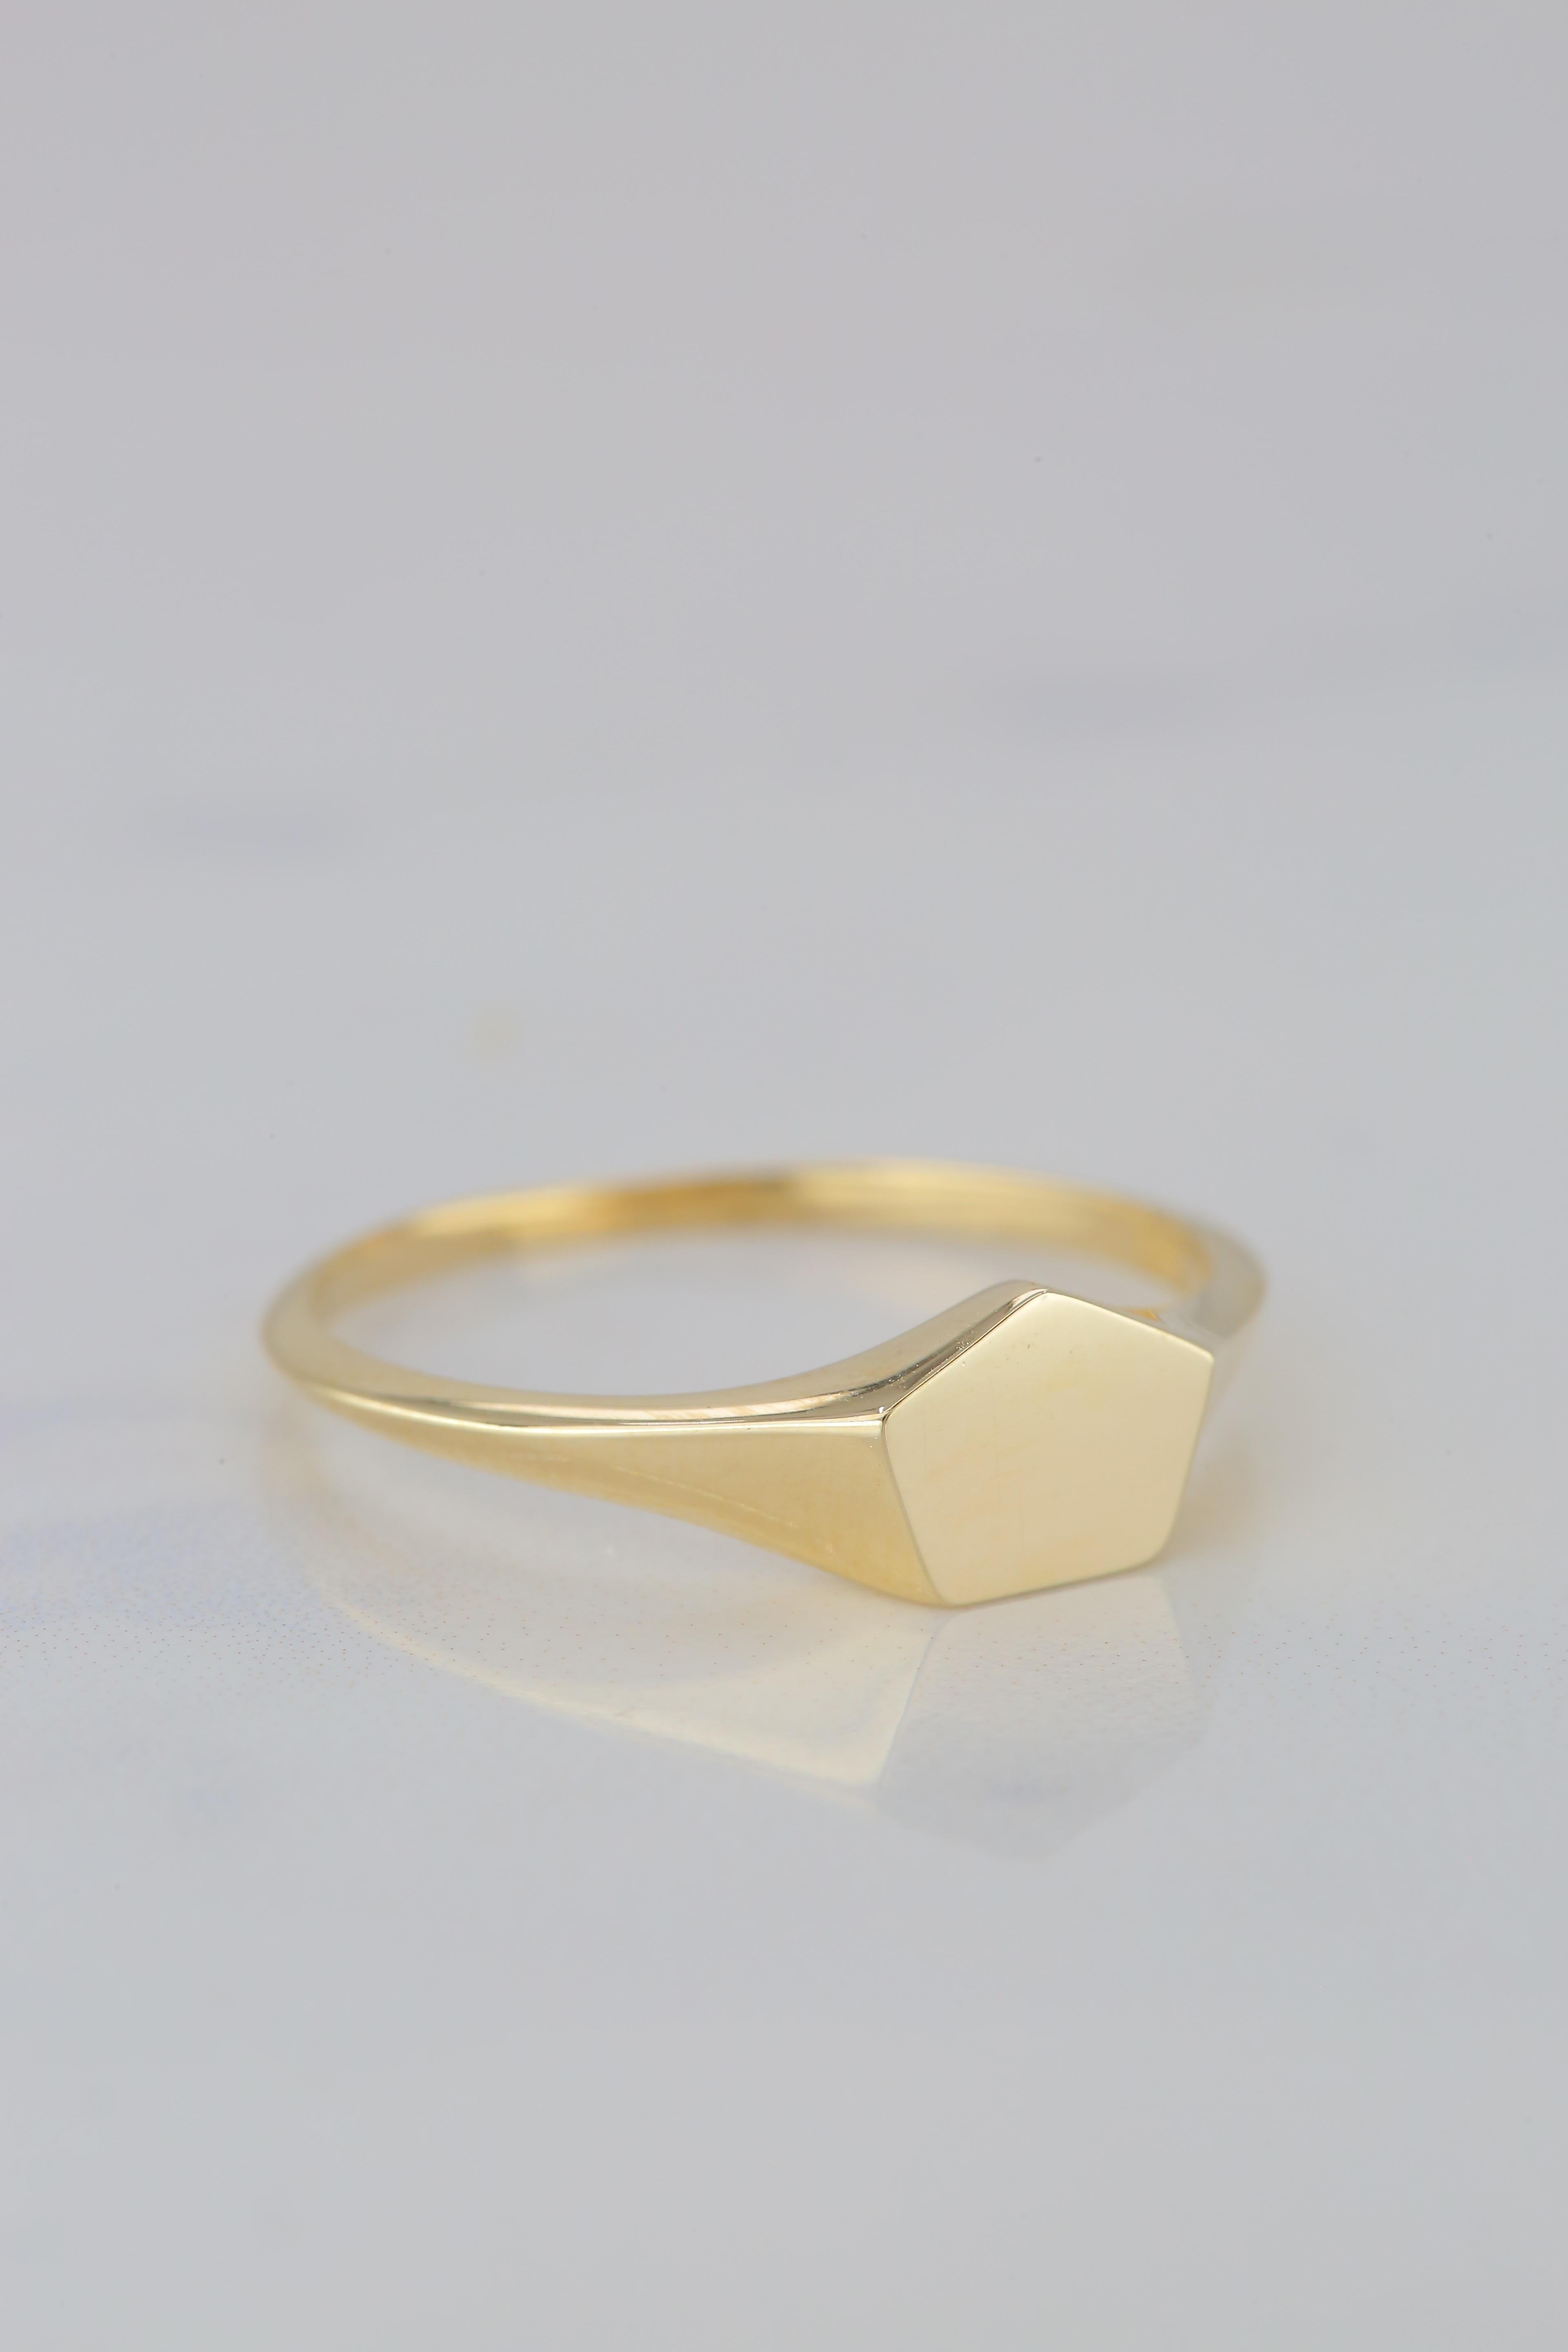 Im Angebot: Rosay Siegelring, 14K Gold Rosay Pentagon Siegelring, kleiner Pentagonal Ring () 6